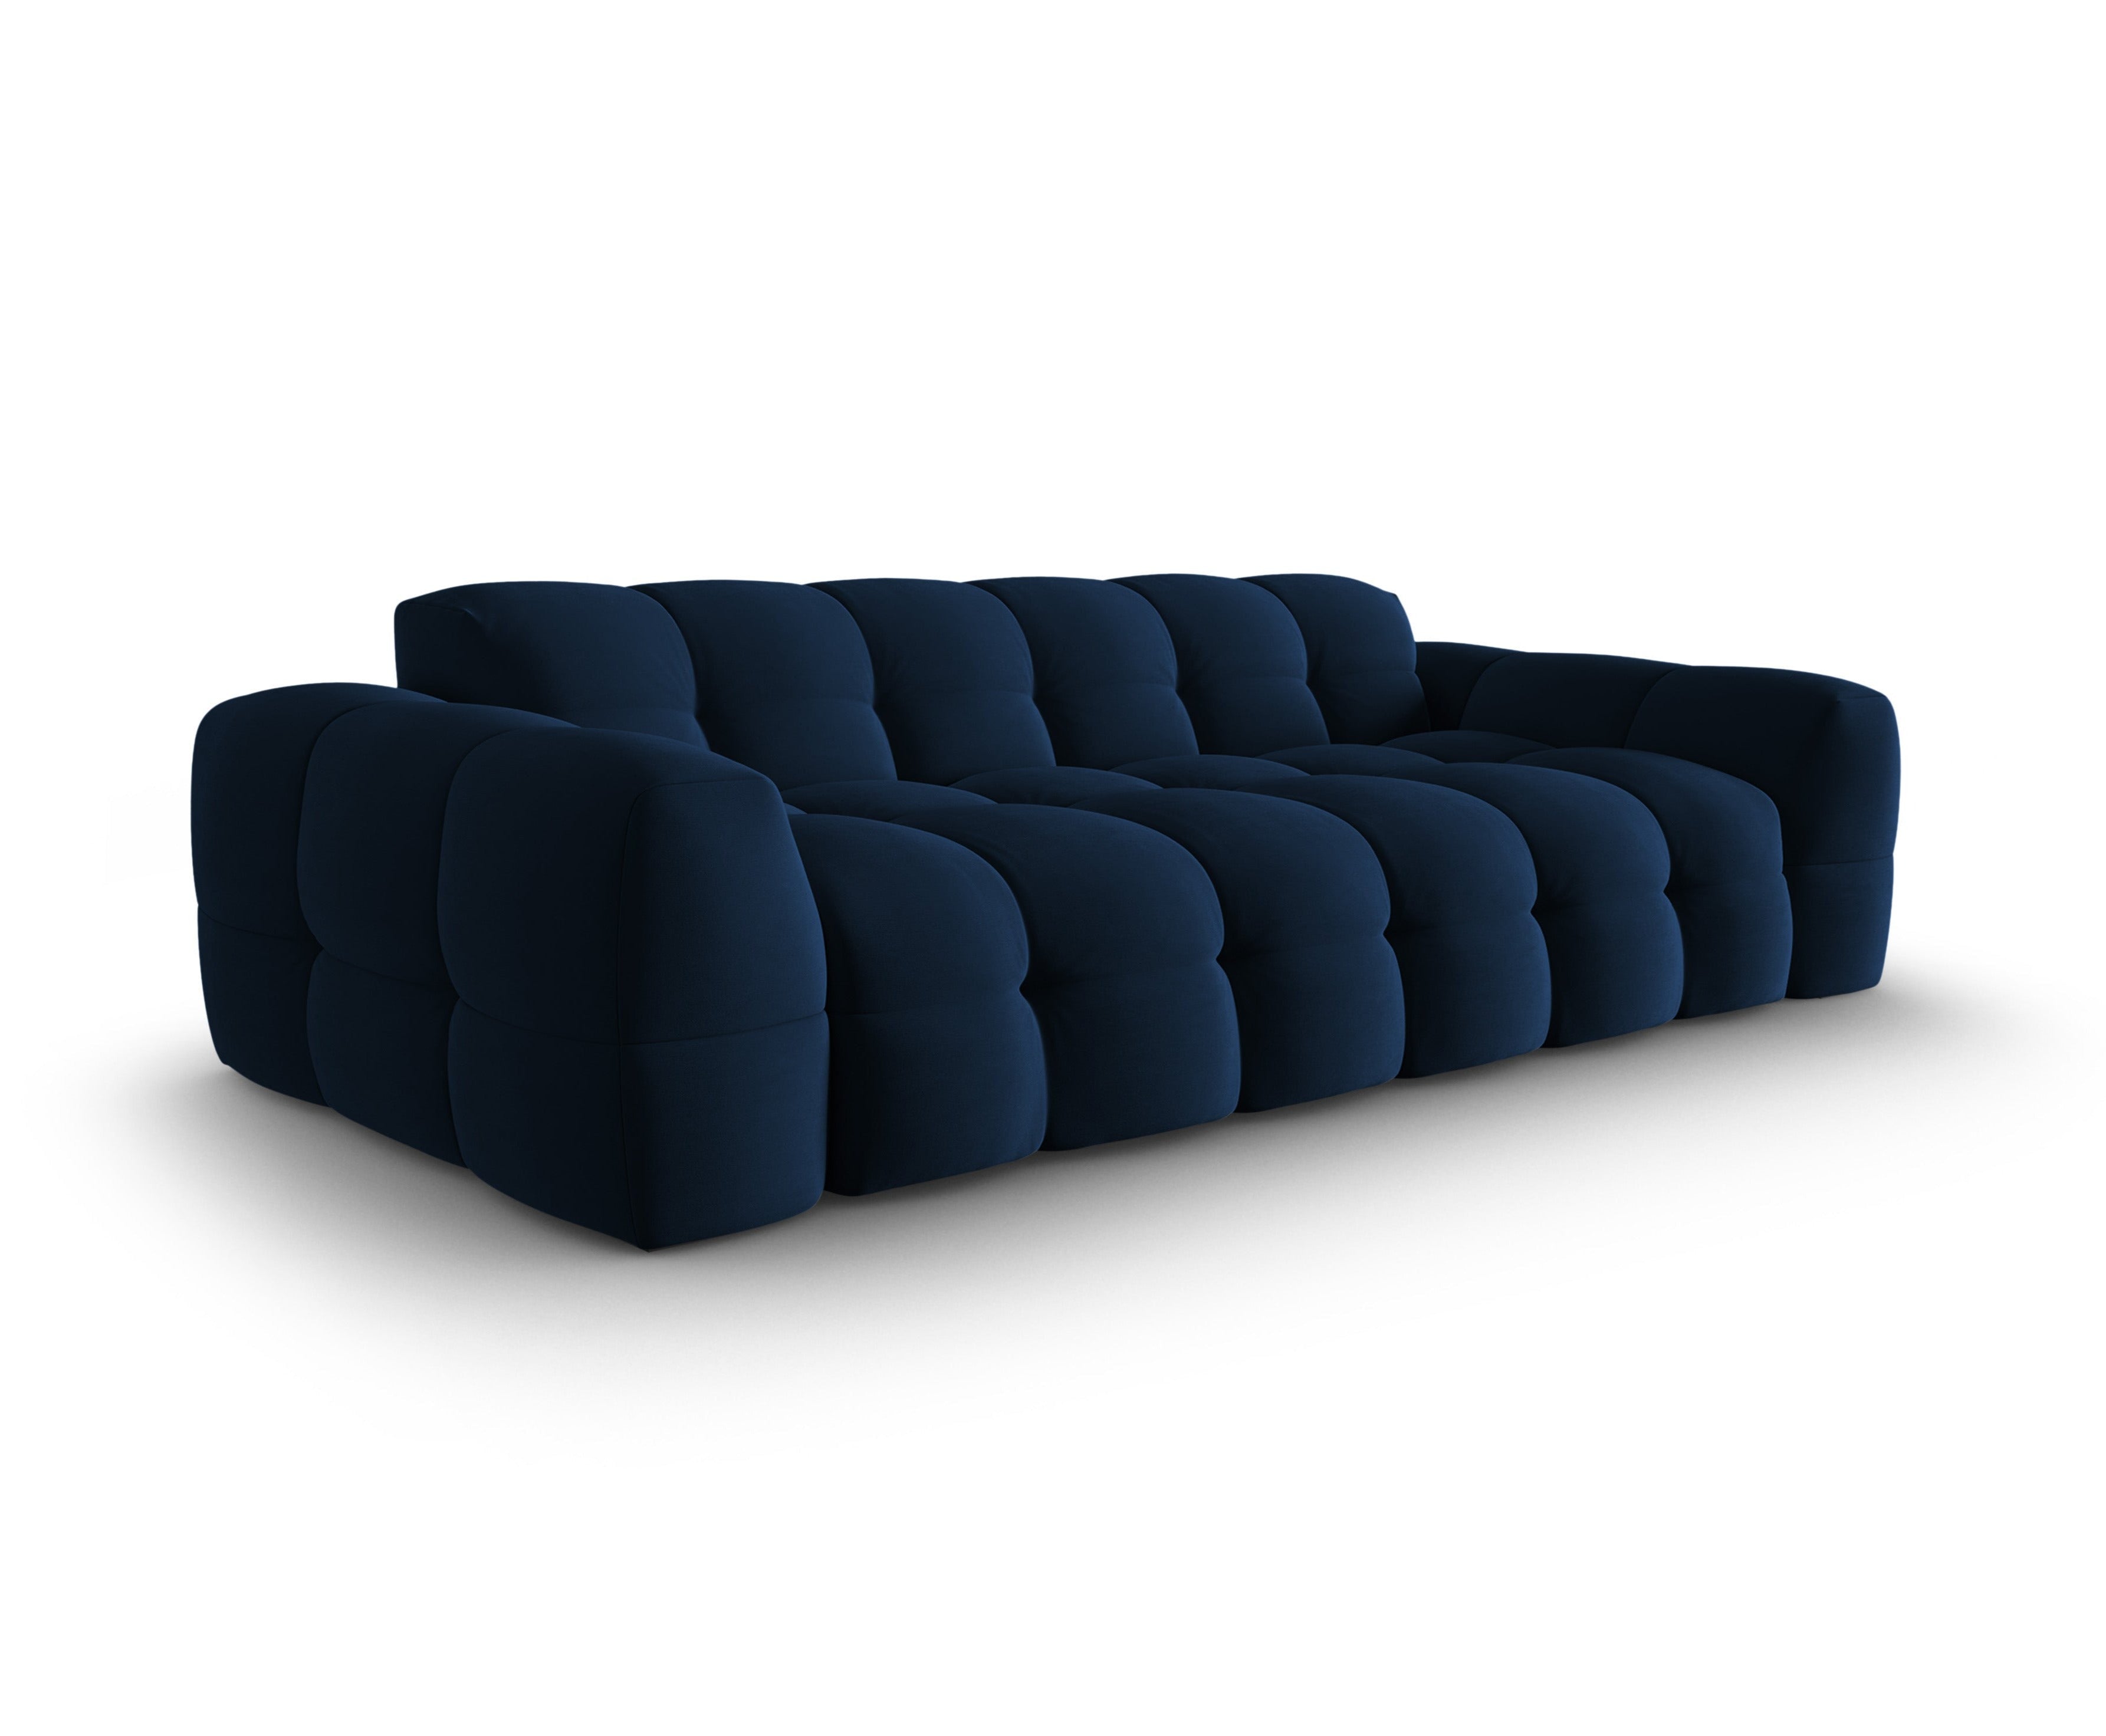 Velvet Sofa, "Nino", 3 Seats, 236x105x68
Made in Europe, Maison Heritage, Eye on Design